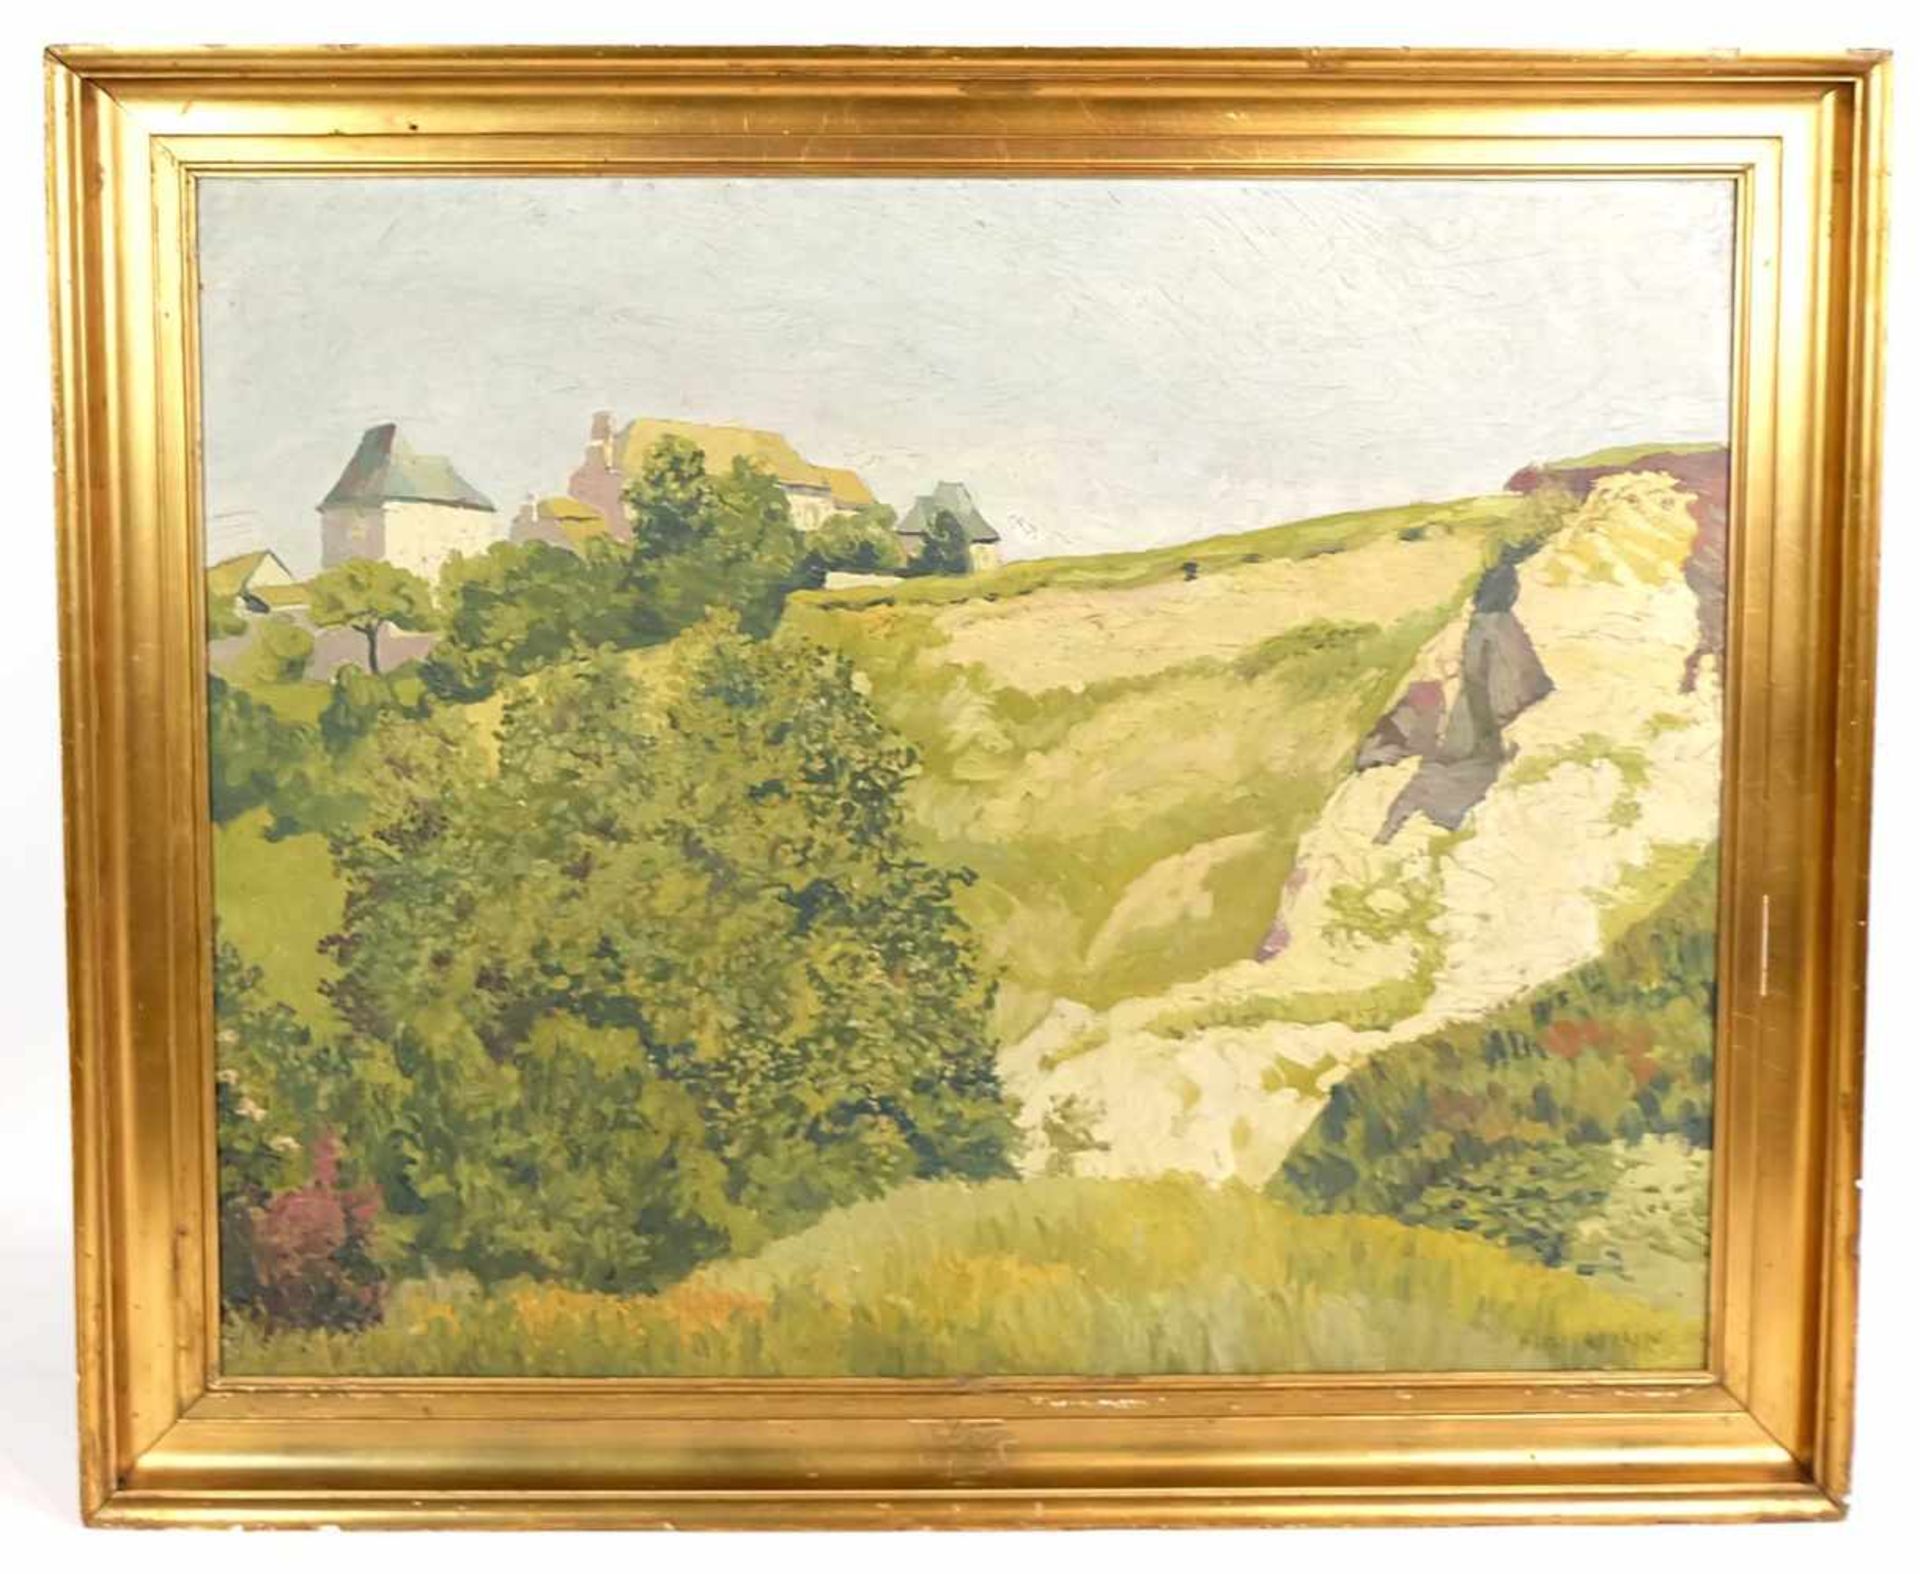 HERMAIN, A., frühes 20. Jh., Öl/ Lw., Häusergruppe über Sandkuhle, rechts unten sign., 65 x 81 cm,